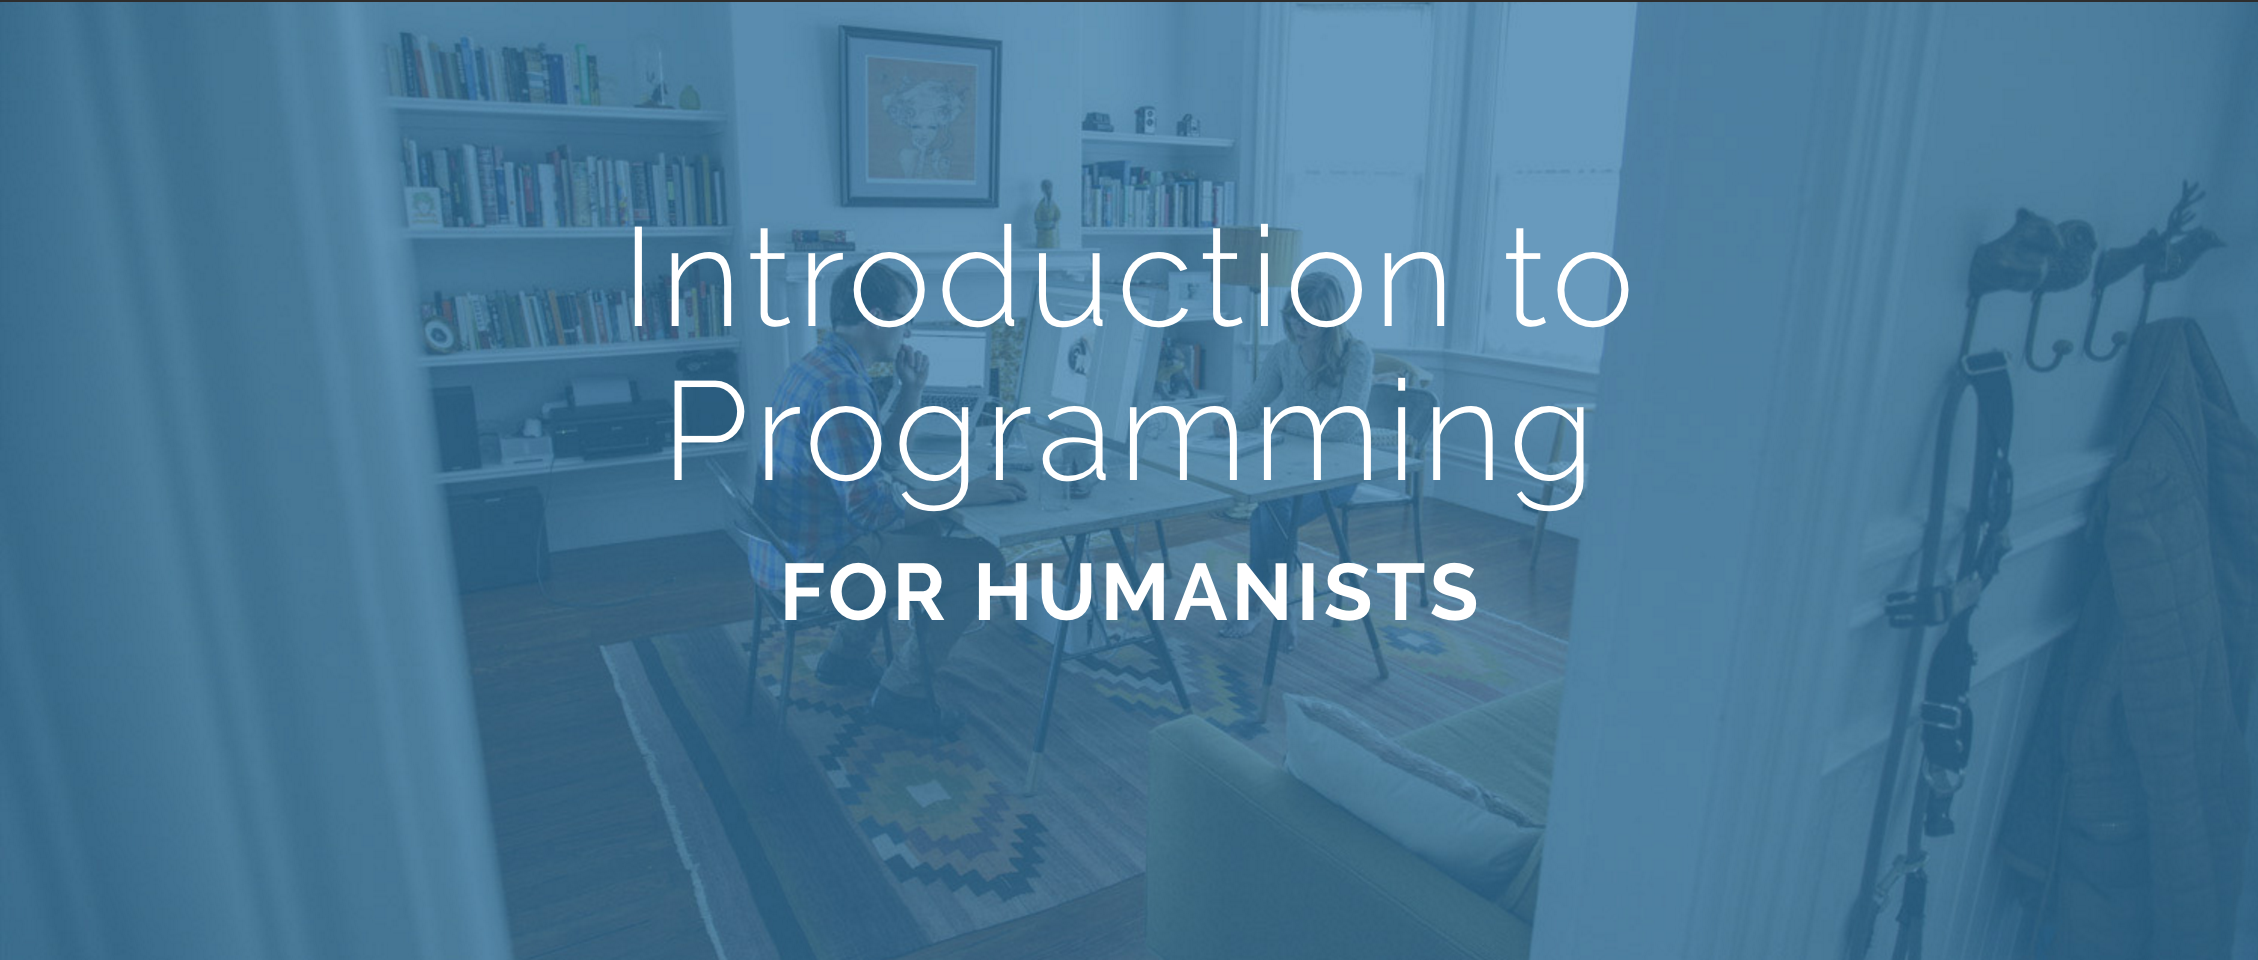 Humanities Programming course splash page.